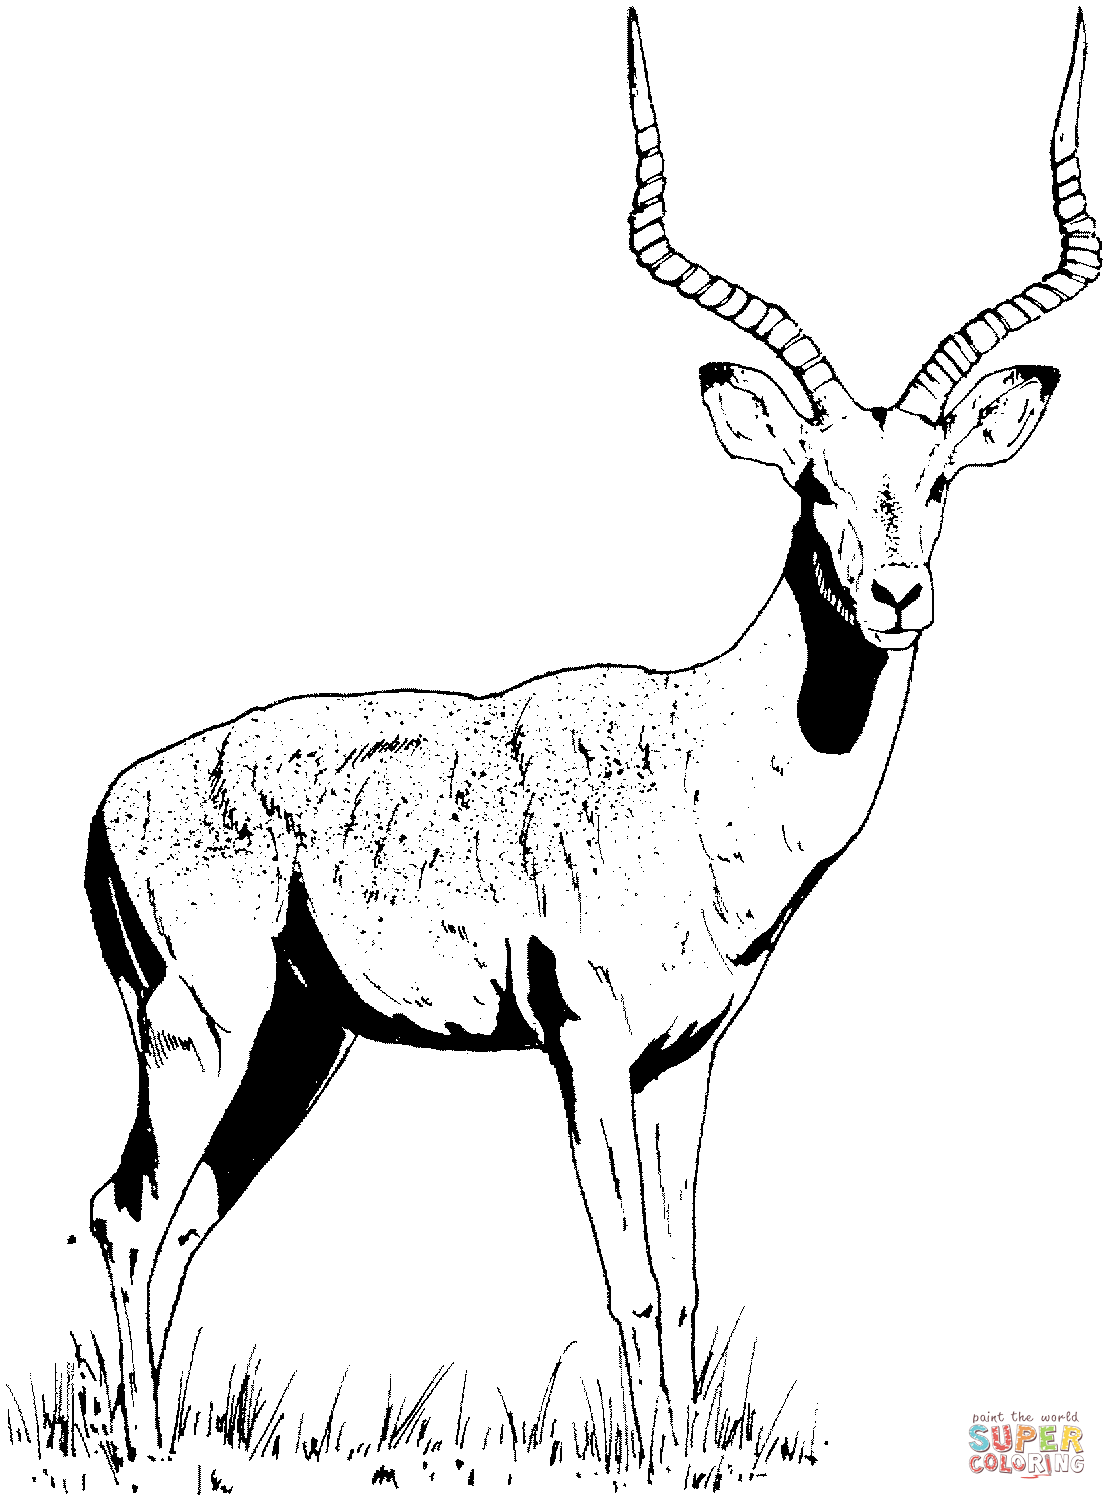 Impala Gazelle coloring page.